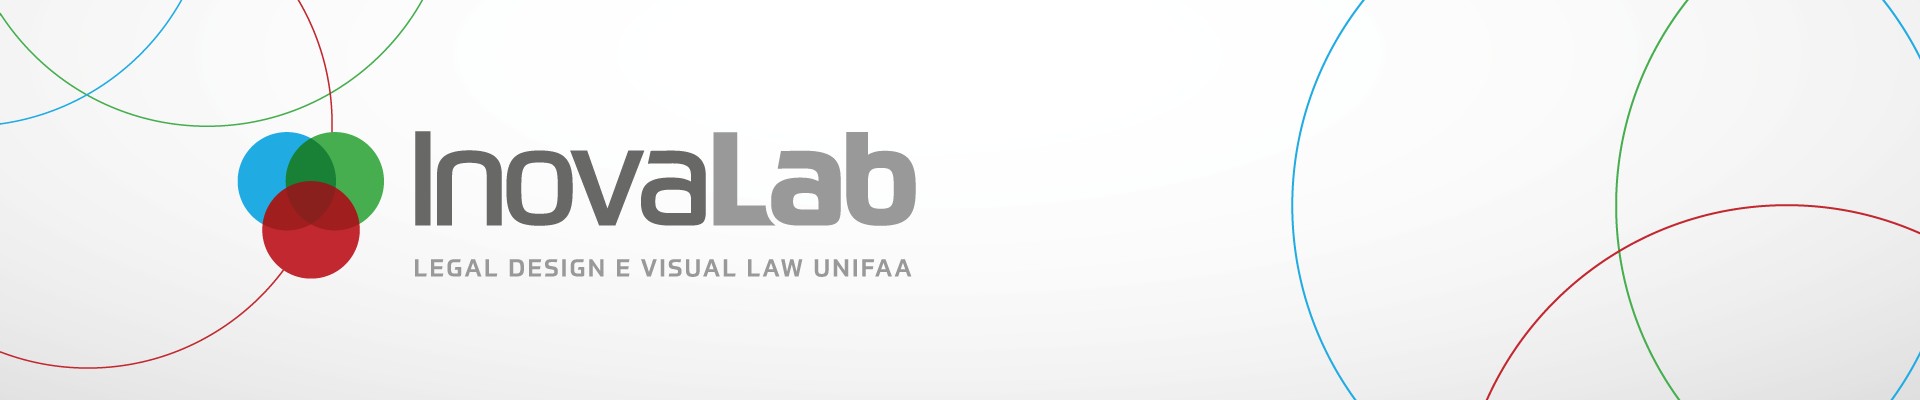 InovaLAB - Legal Design e Visual Law